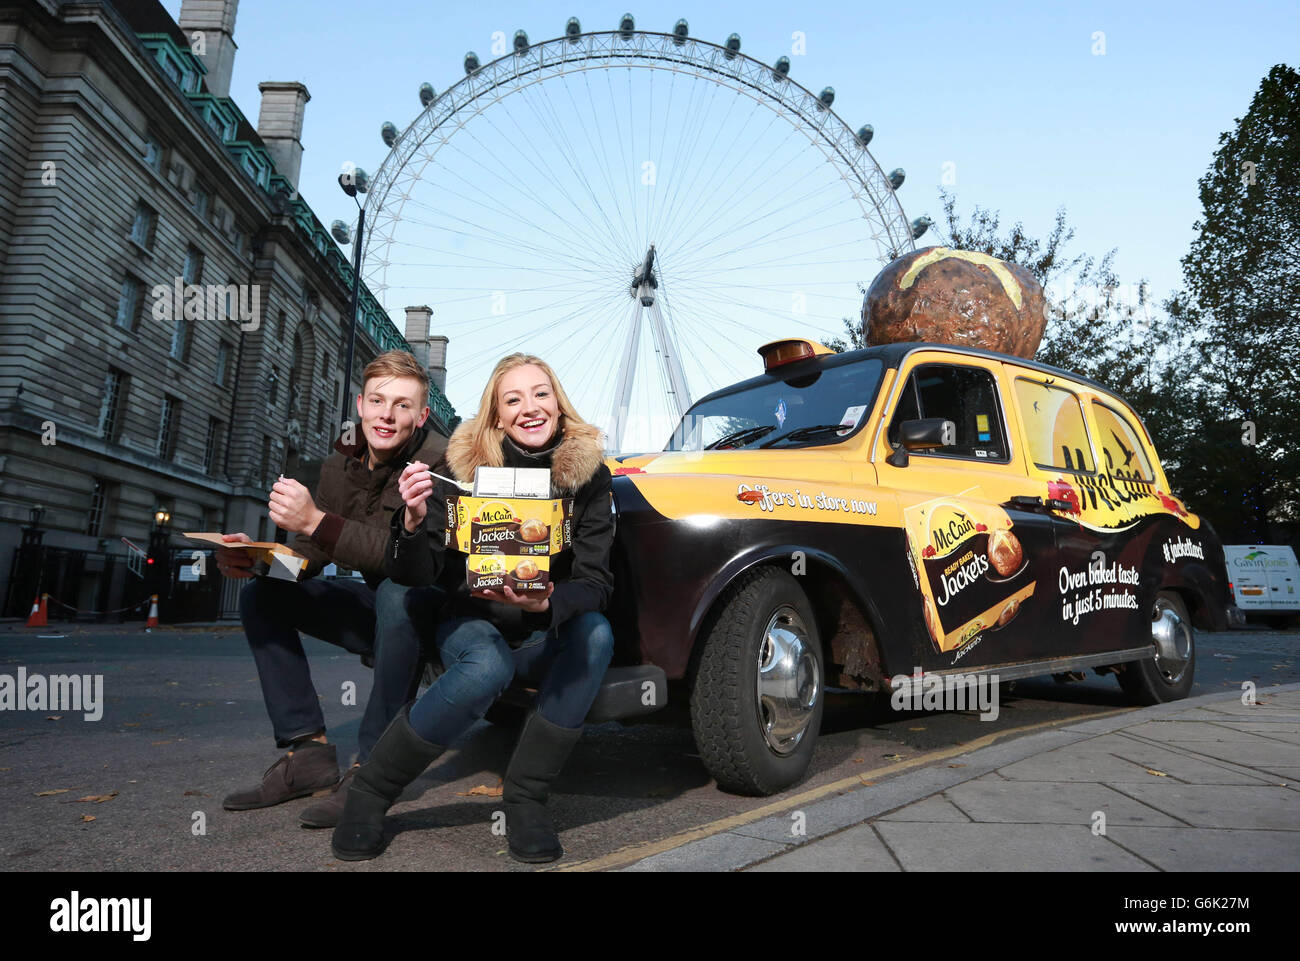 McCain taxi in London Stock Photo